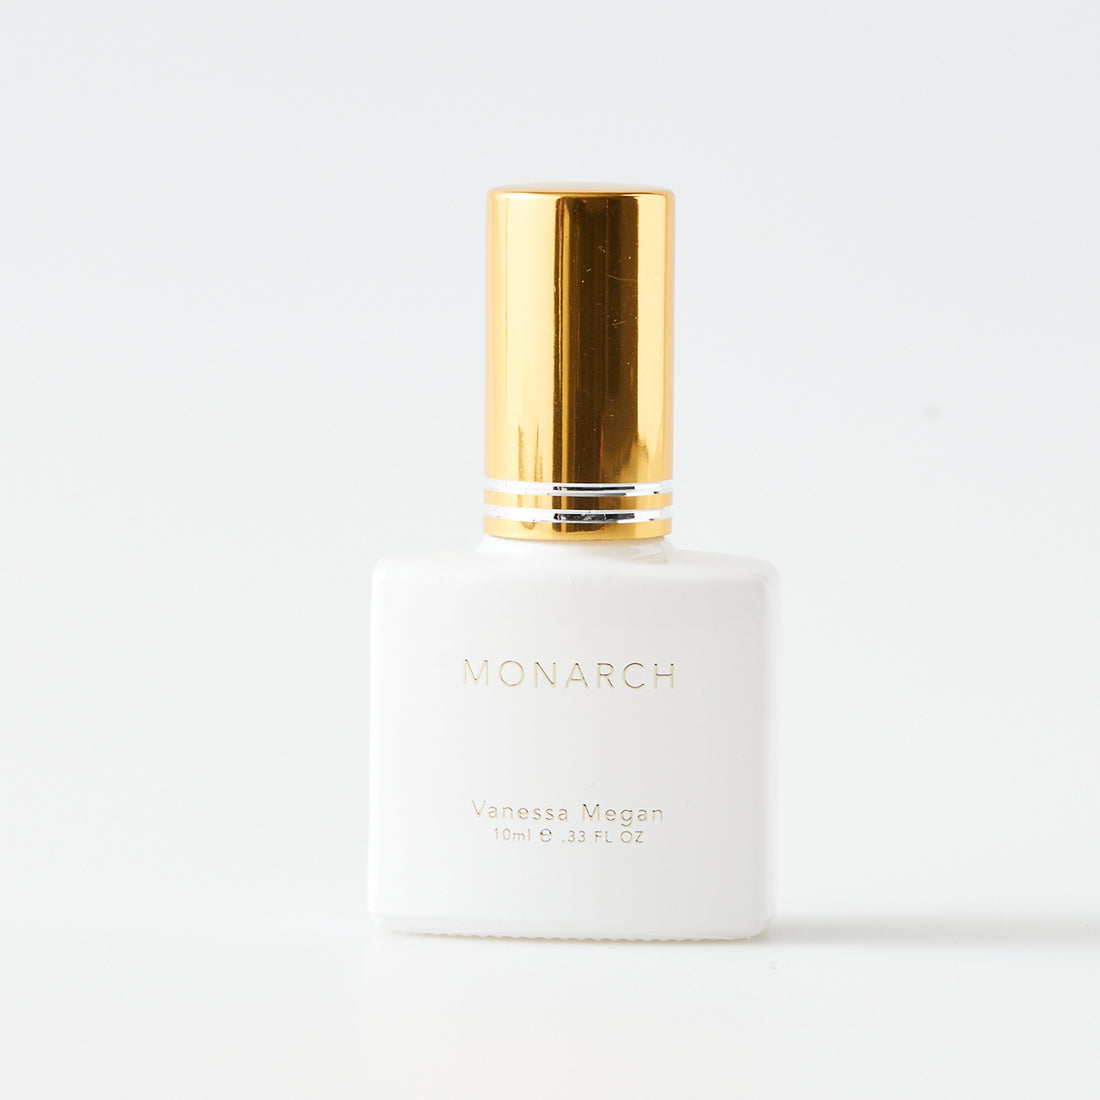 Vanessa Megan Monarch 10ml natural perfume